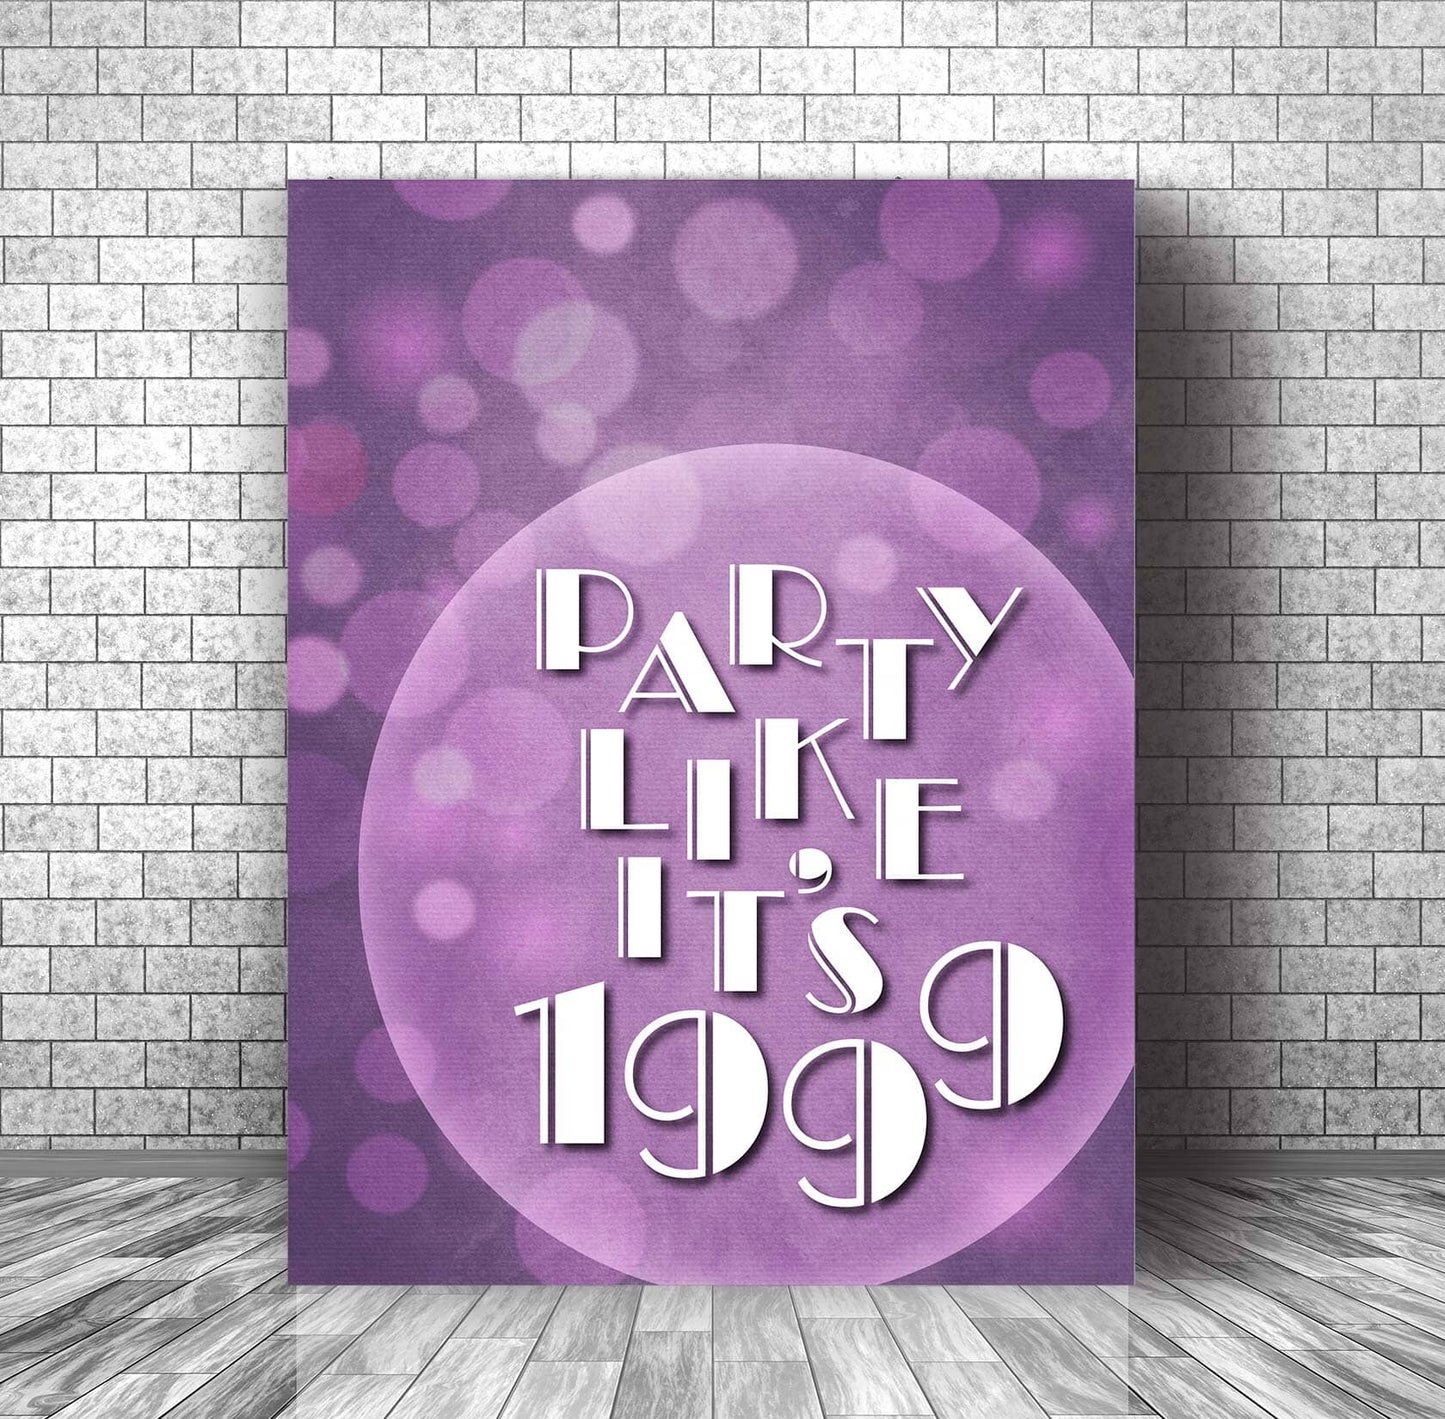 1999 by Prince - Song Lyrics Art Print Inspired Music Poster Song Lyrics Art Song Lyrics Art 